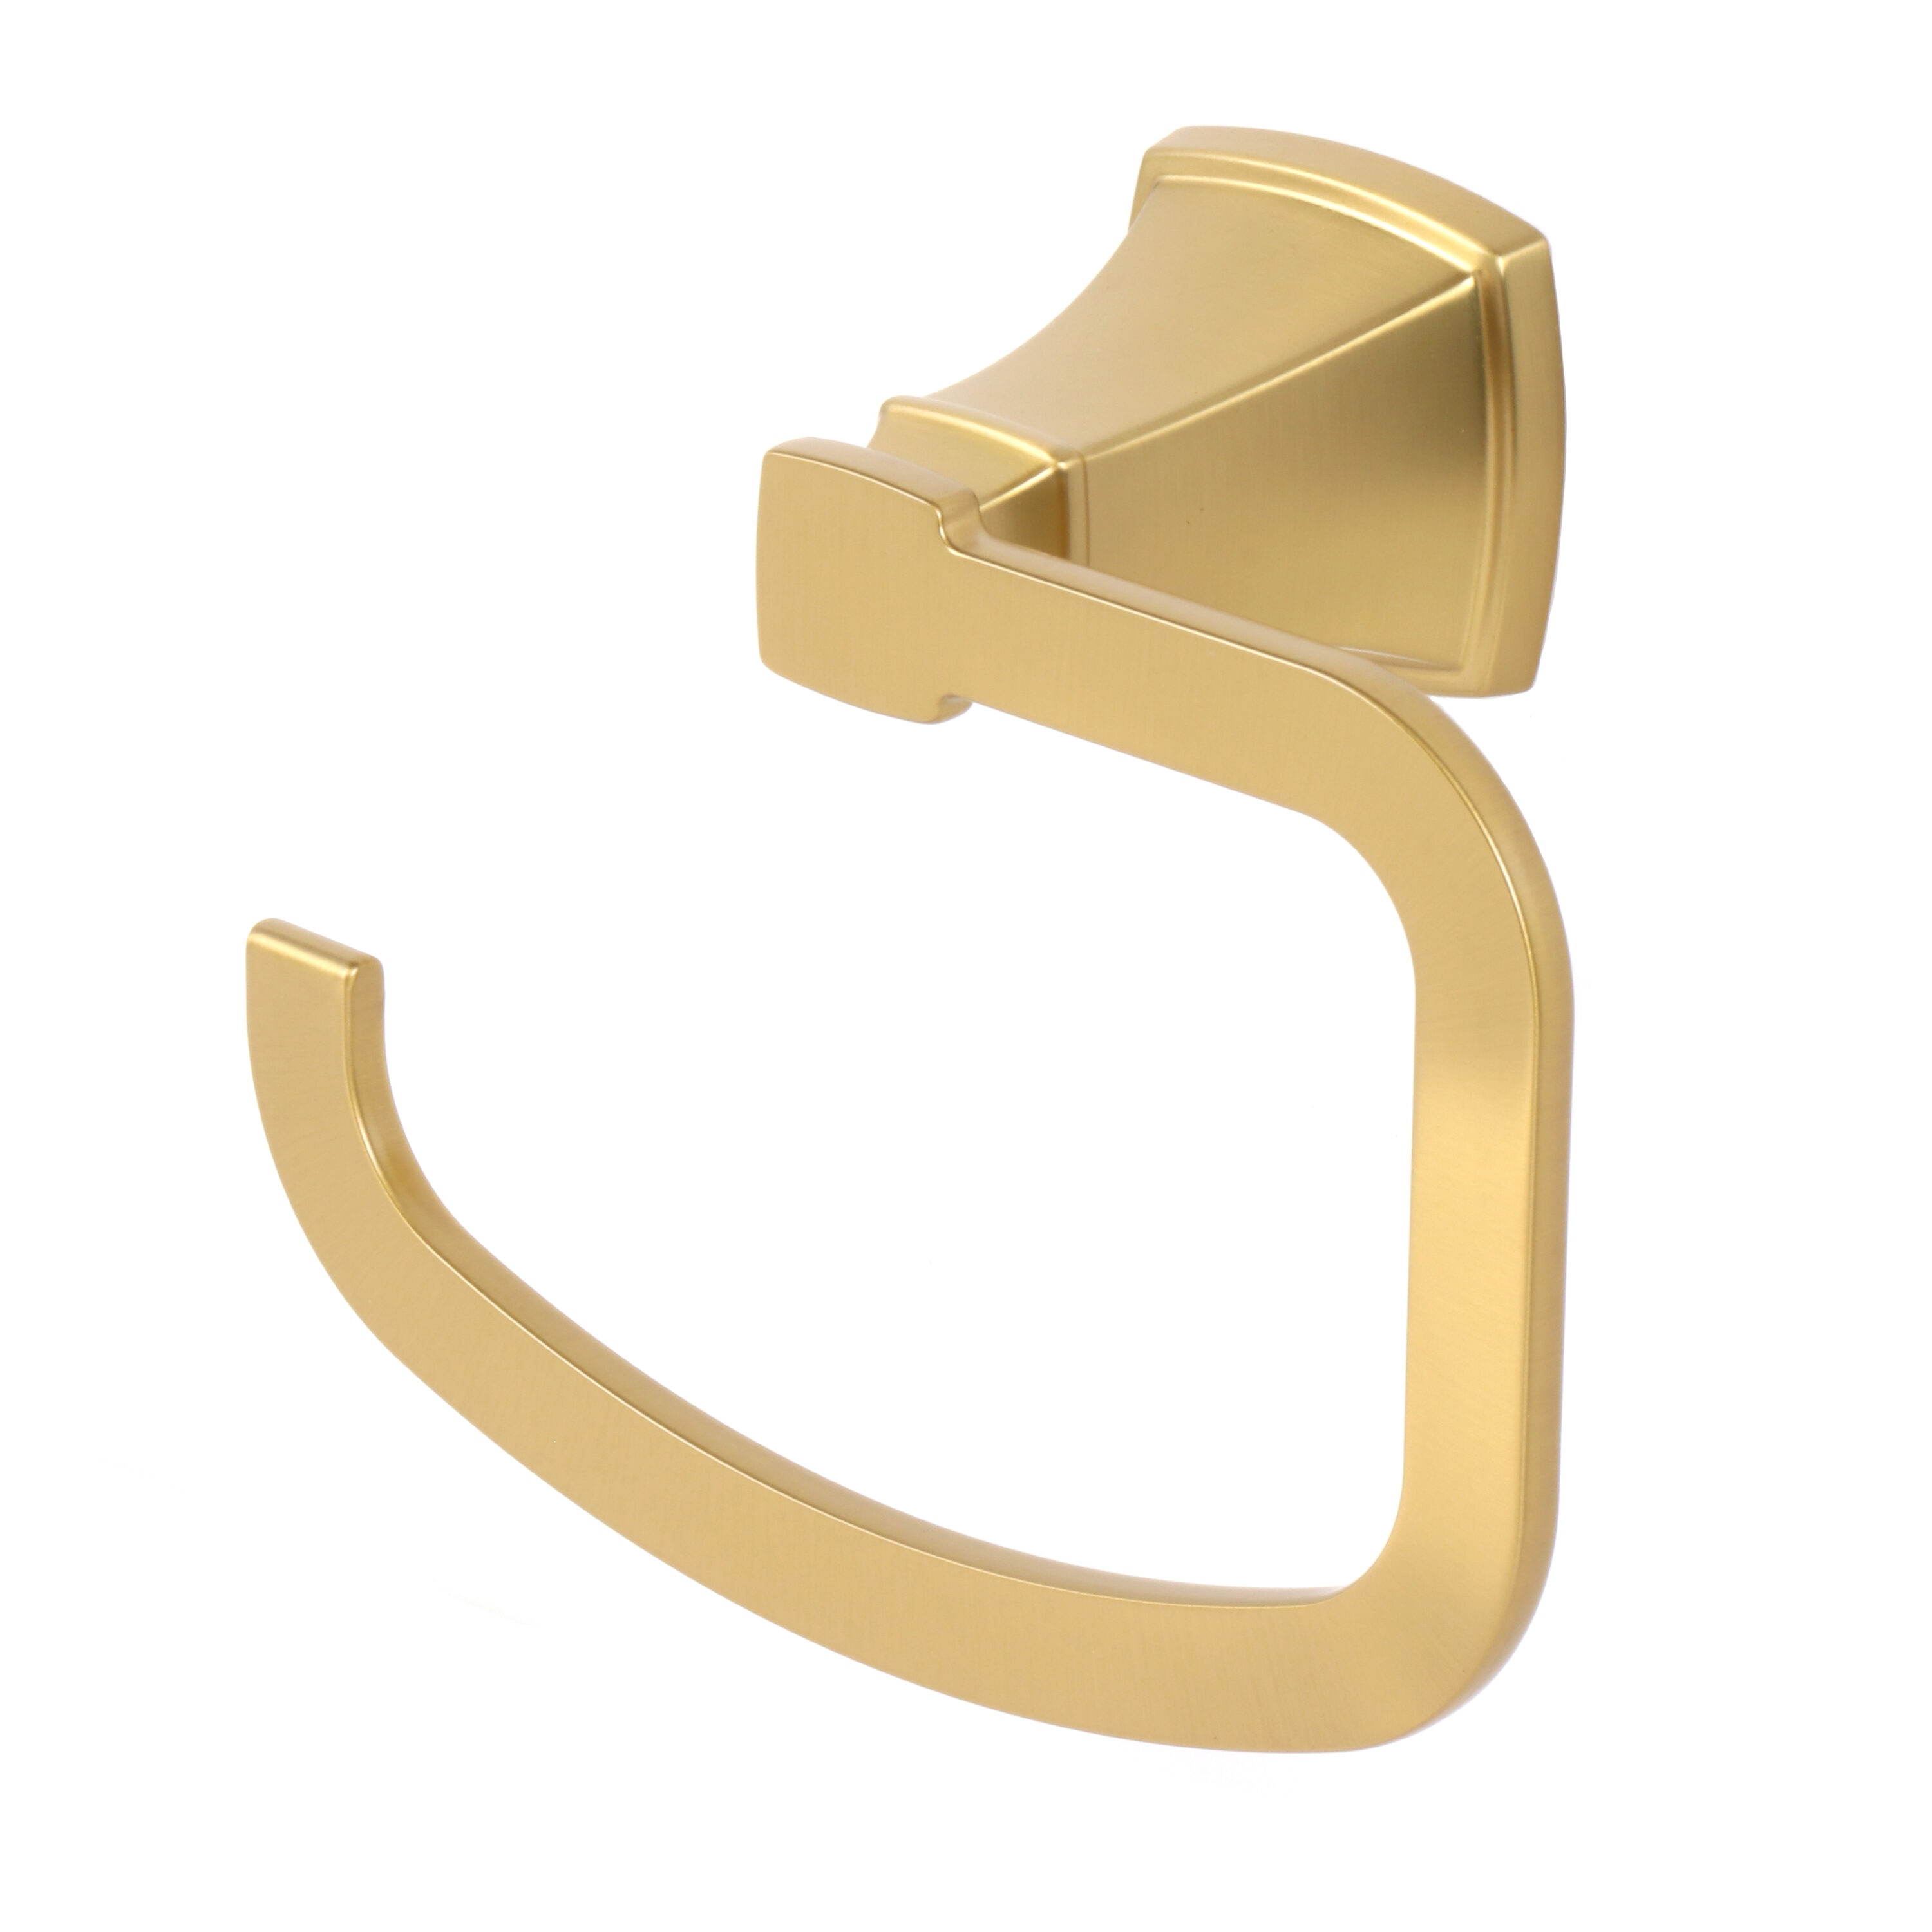 allen + roth 3-Piece Chesler Gold Decorative Bathroom Hardware Set